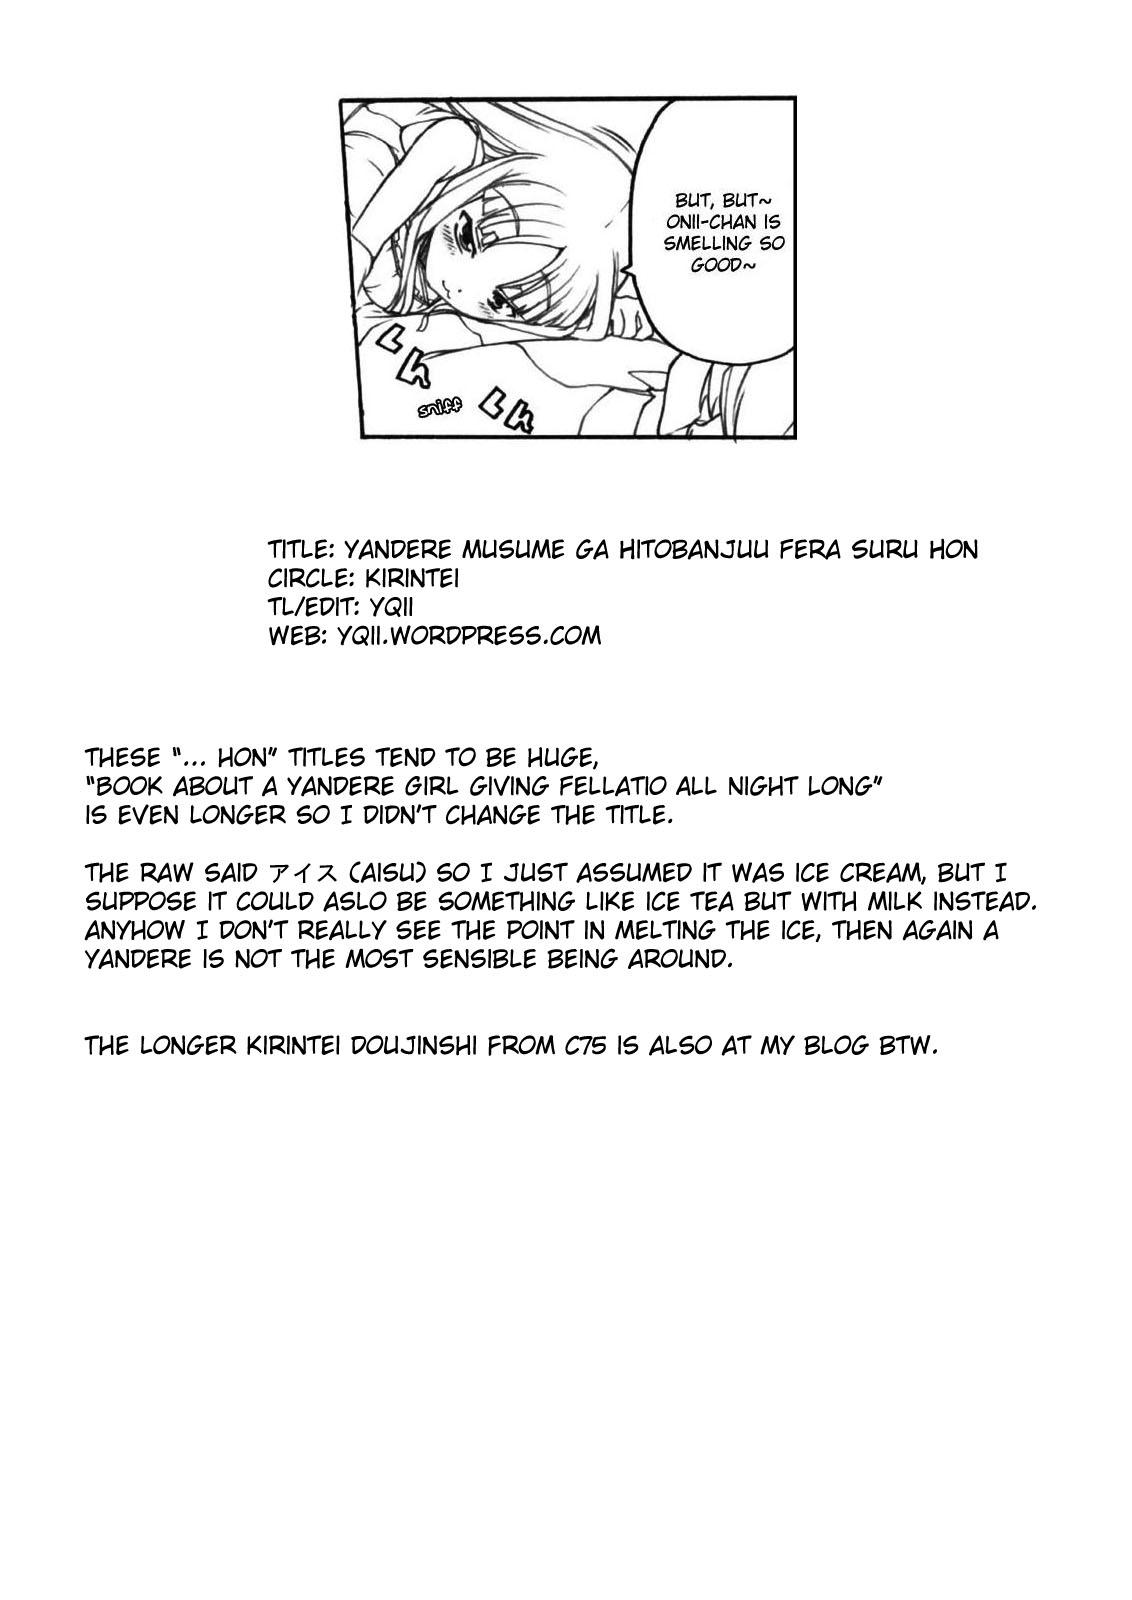 Licking Yandere Musume ga Hitobanjuu Fella Suru Hon Pool - Page 13